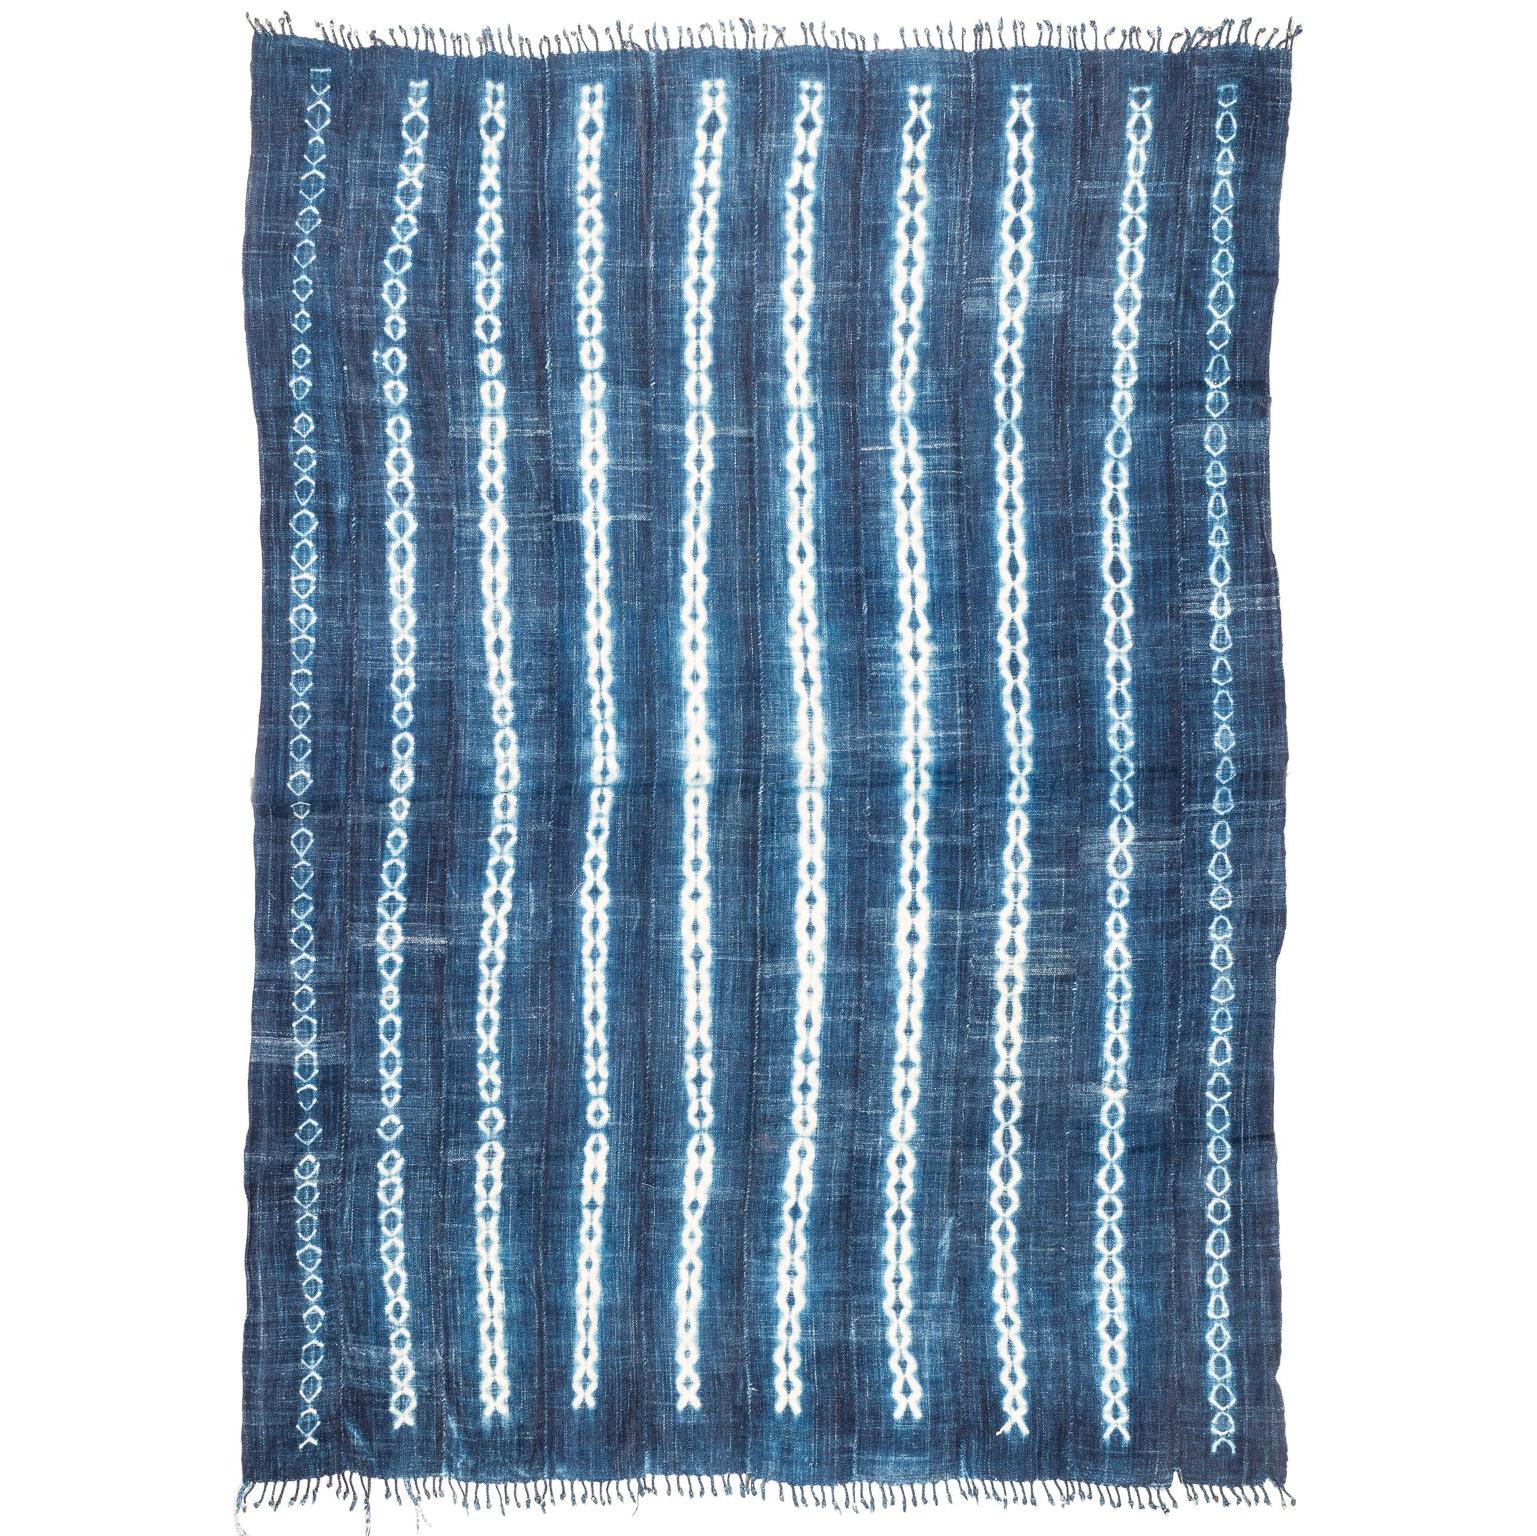 Vintage African Indigo Blue and White Cotton Wrap Blanket